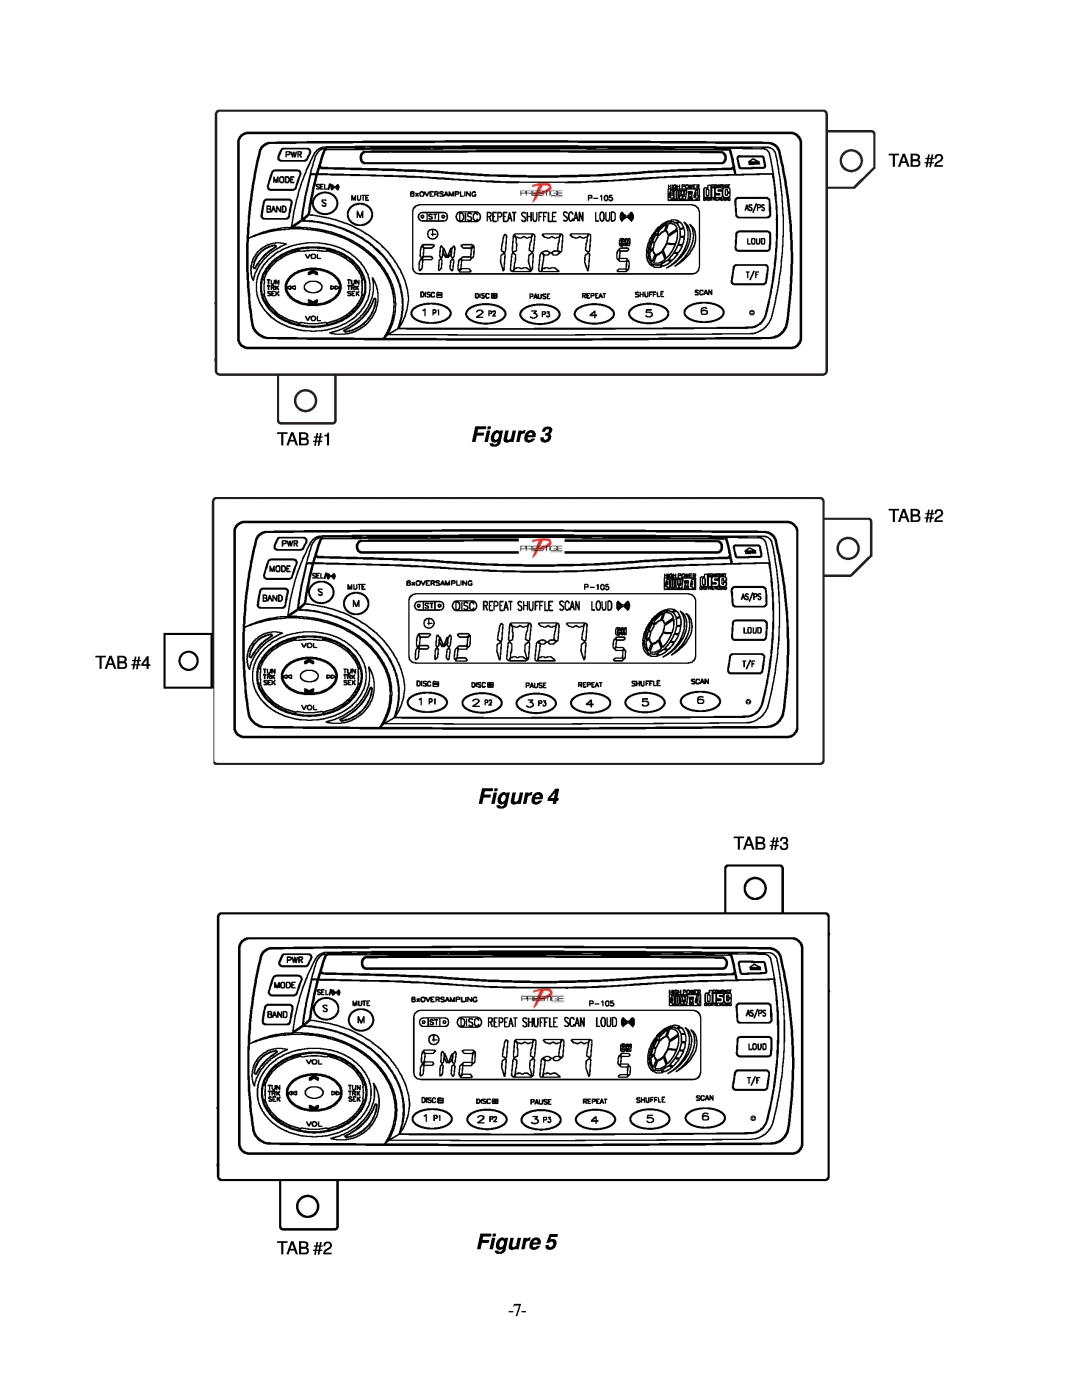 Audiovox P-105 installation manual TAB #1, TAB #2 TAB #4, TAB #3 